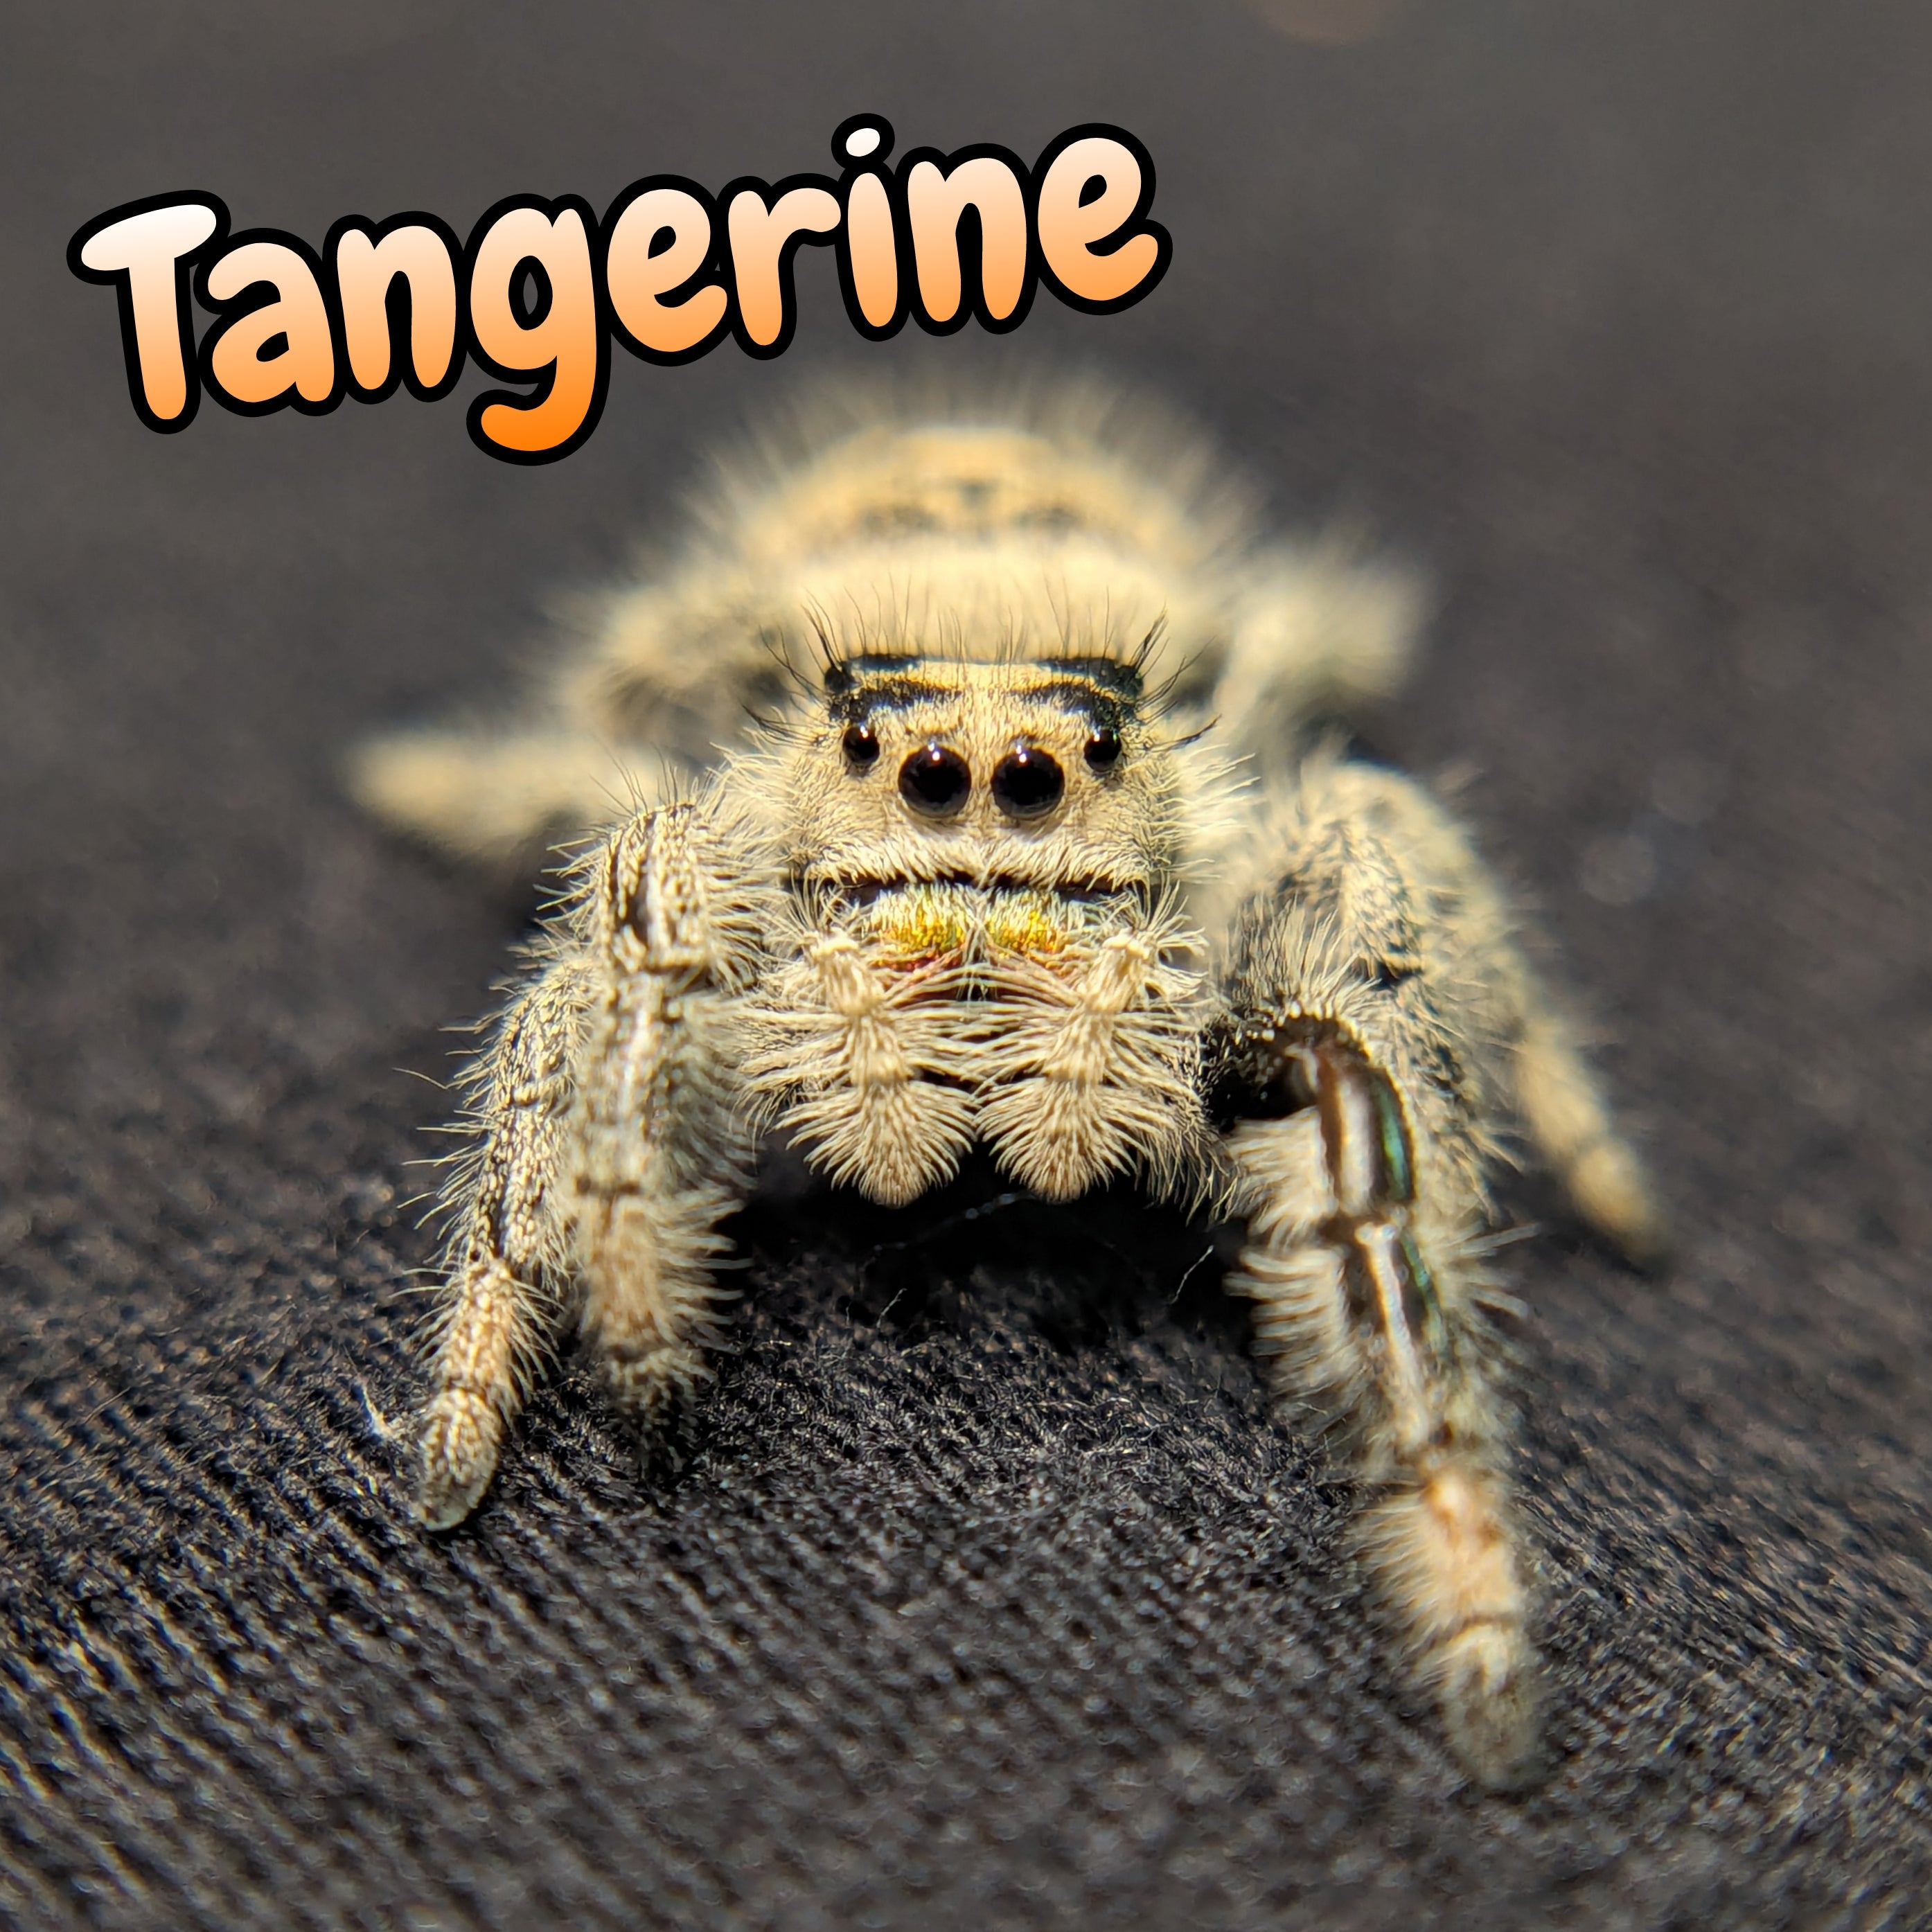 Regal Jumping Spider "Tangerine"